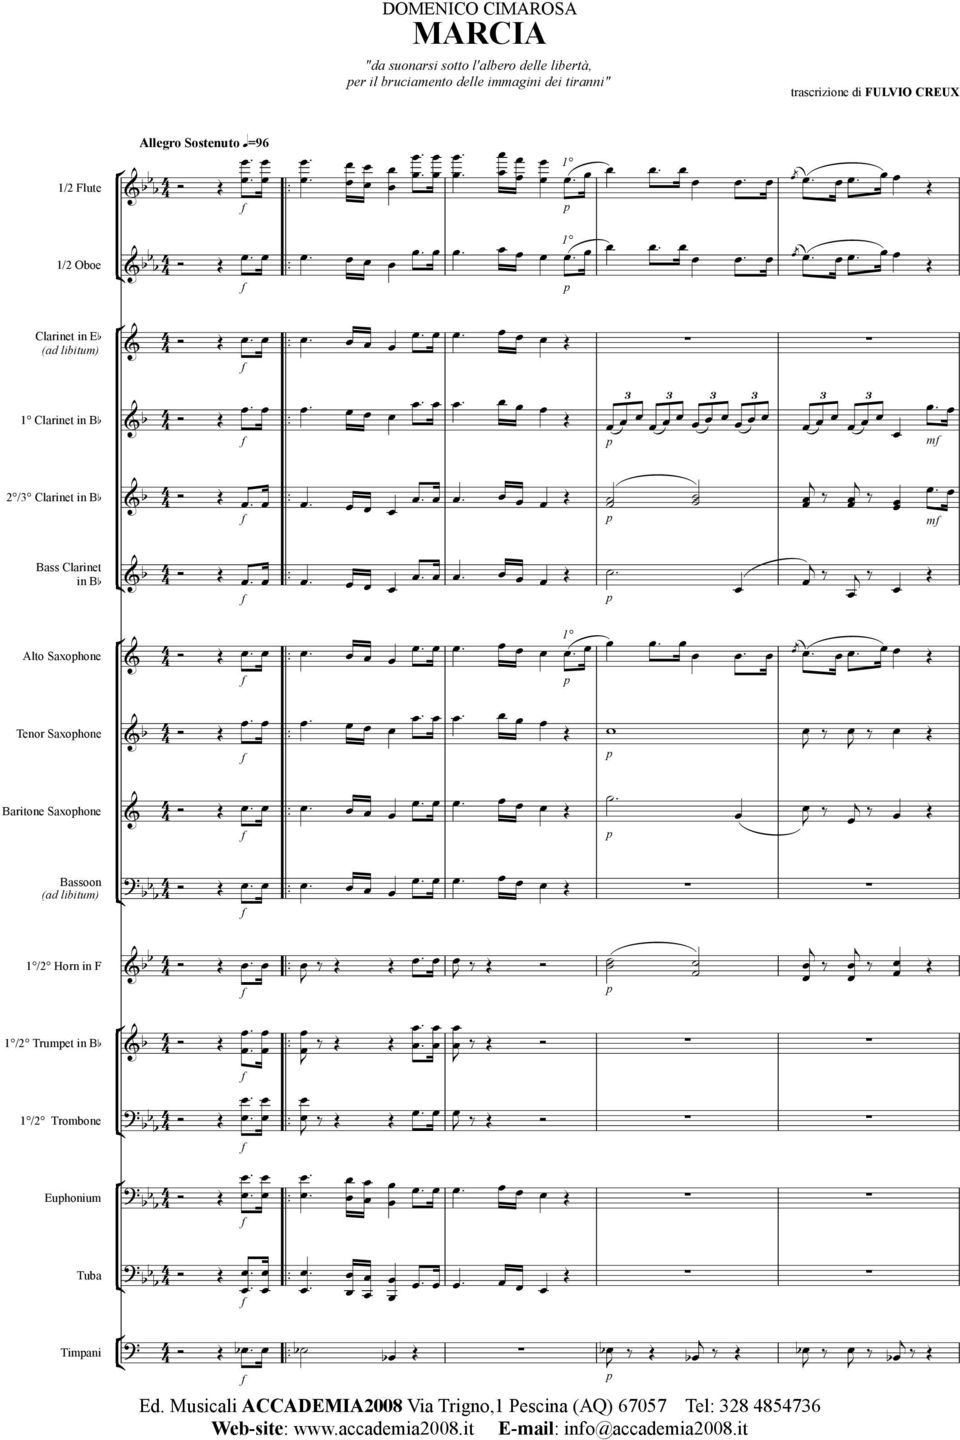 Tenor Saxohone $ -.,., Baritone Saxohone +., *, Bassoon ad libitum 1 /2 Horn in F 1 /2 Trumet in Bb 1 /2 Trombone Euhonium Tuba Timani $ $ $ $$,.., ' + + *, $.,., ' $ $ $.,., ' $ $ $ $ $ $ $ $ + $ $,.